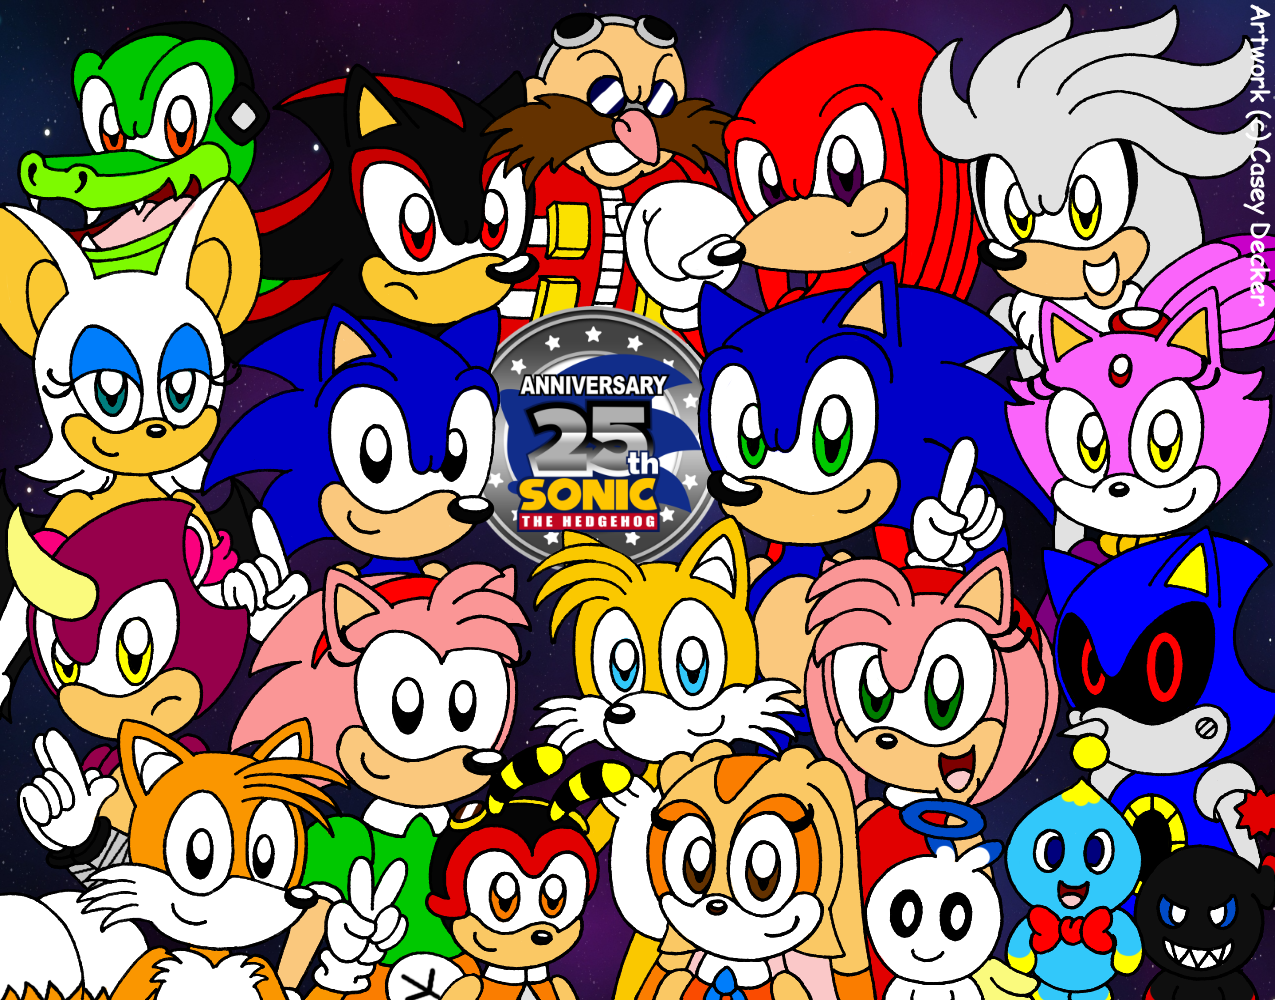 Sonic The Hedgehog's 25th Anniversary